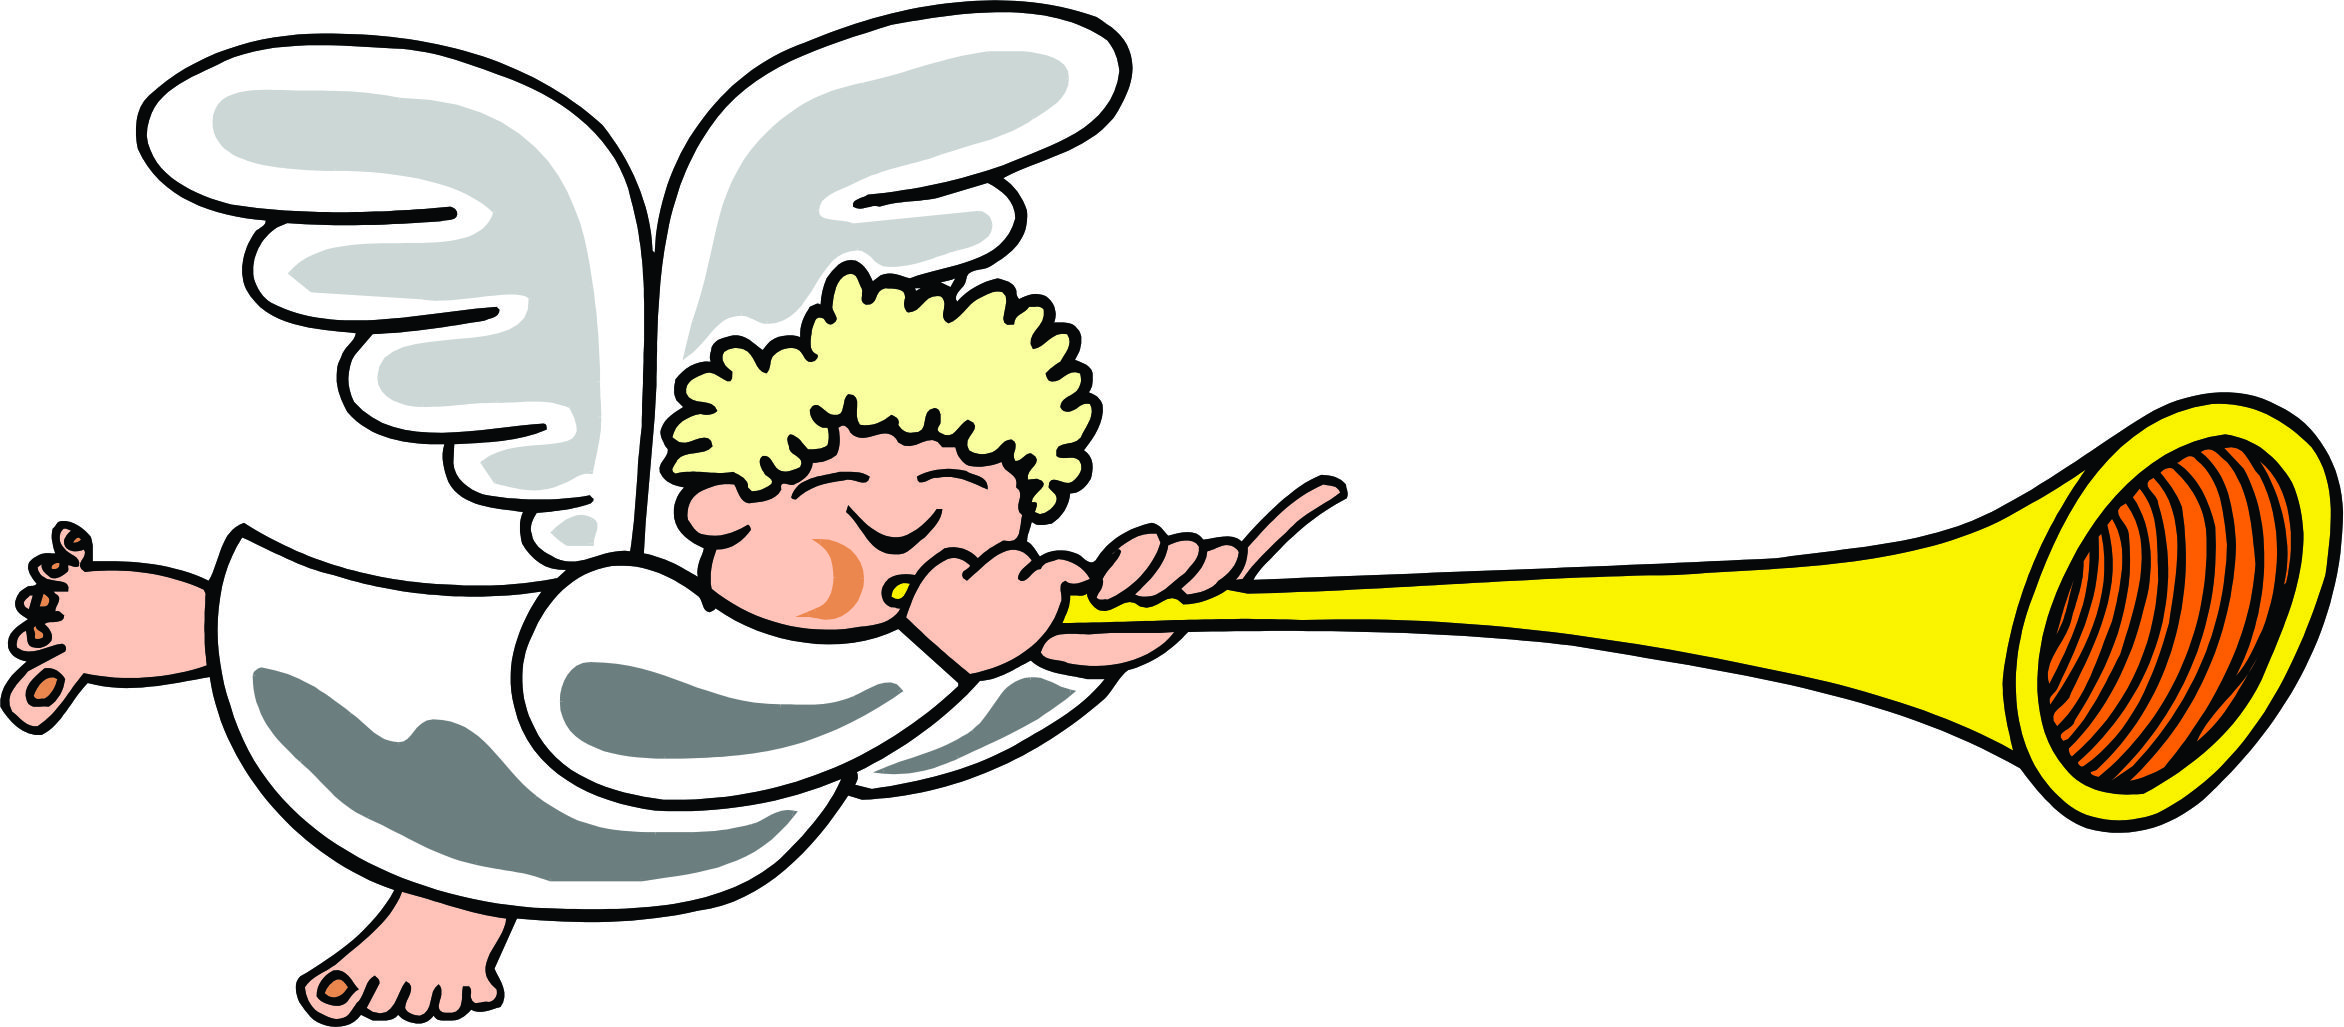 Baby Angel Cartoon Pictures - ClipArt Best